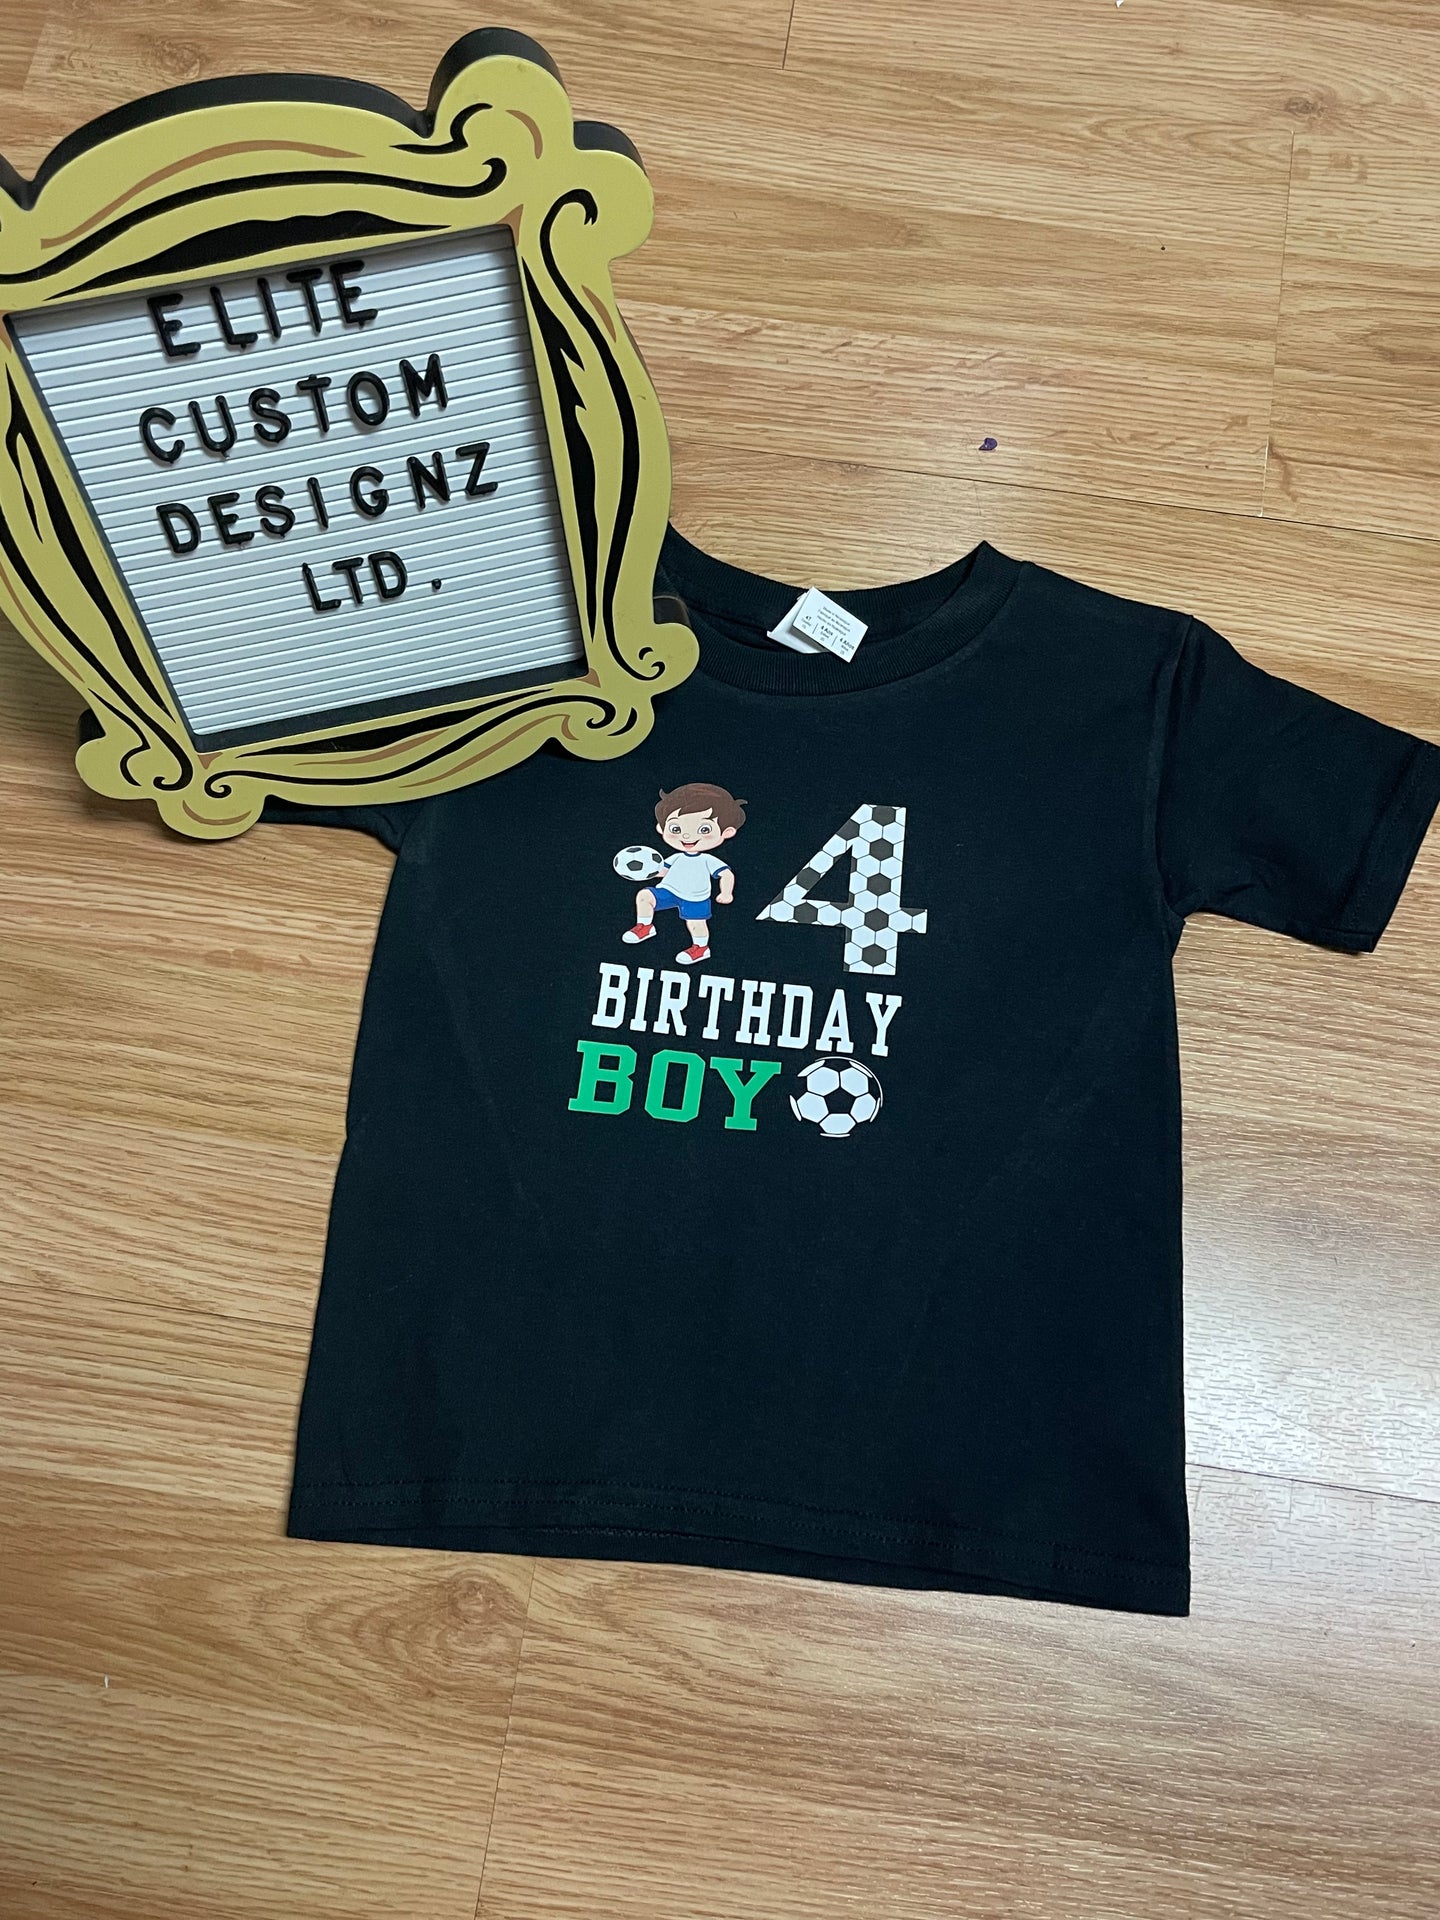 Birthday Boy Soccer Themed Kids T-shirt